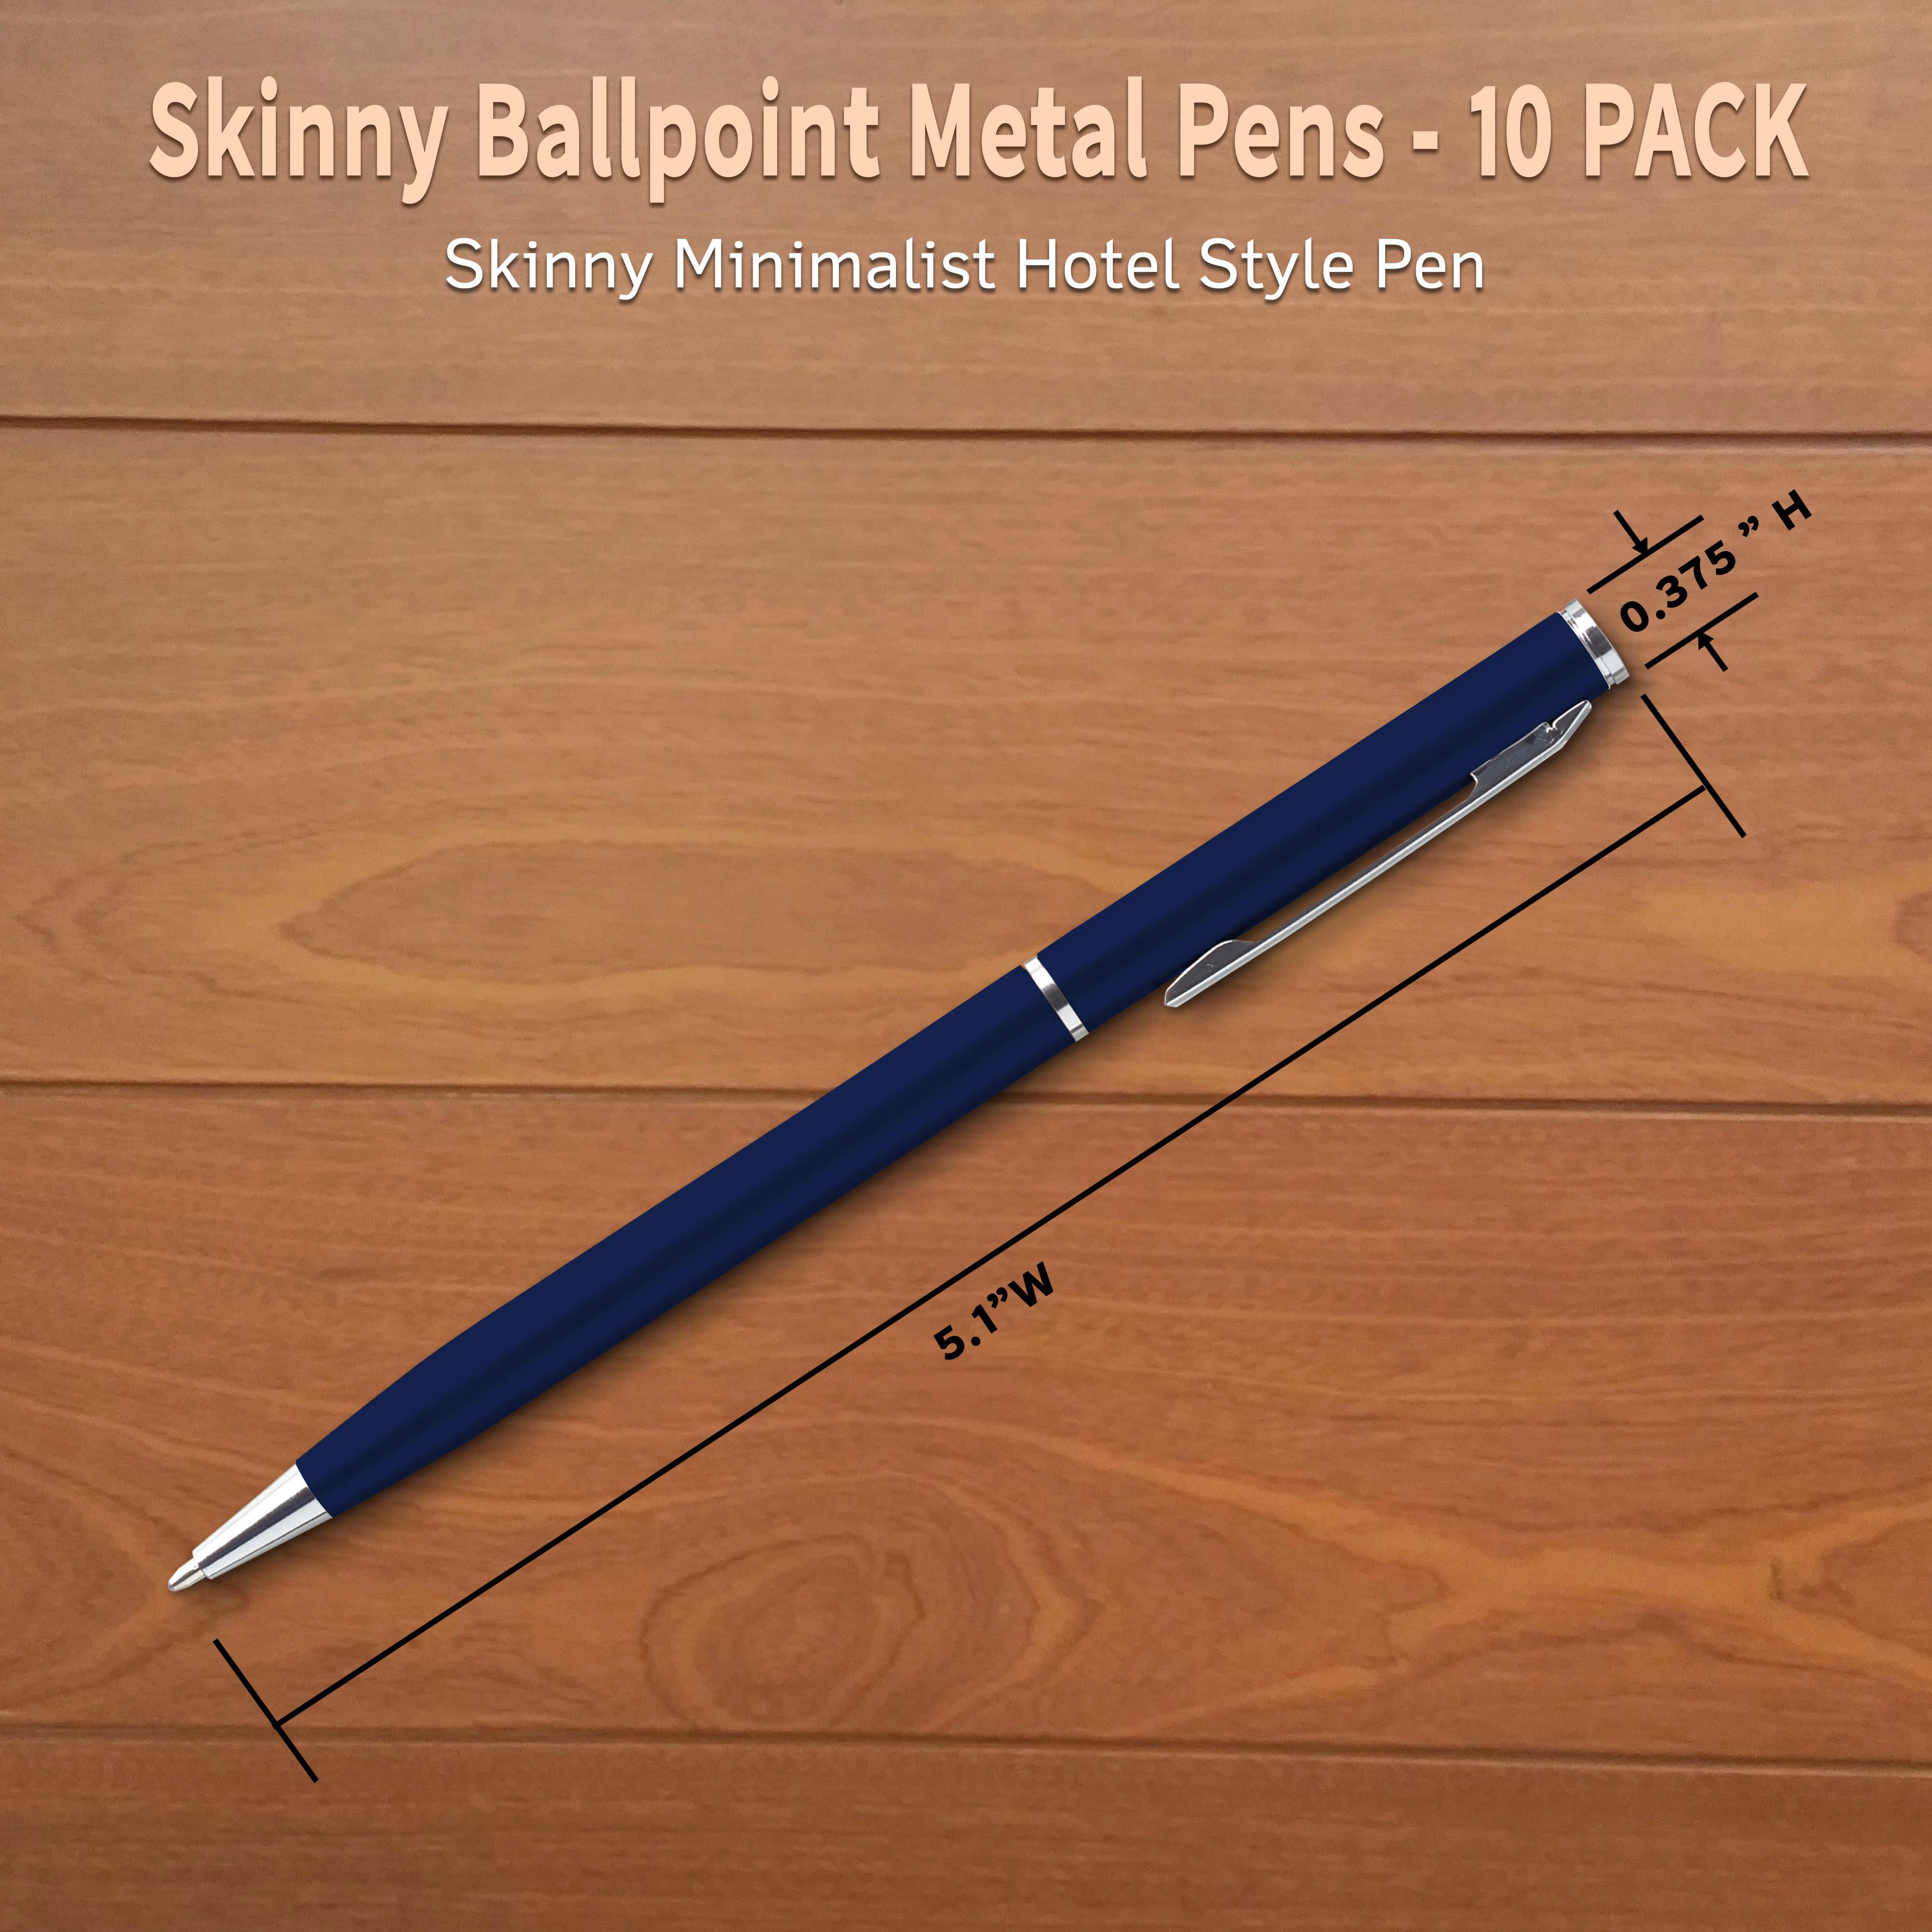 Skinny Metal Ballpoint Pen Gift Set